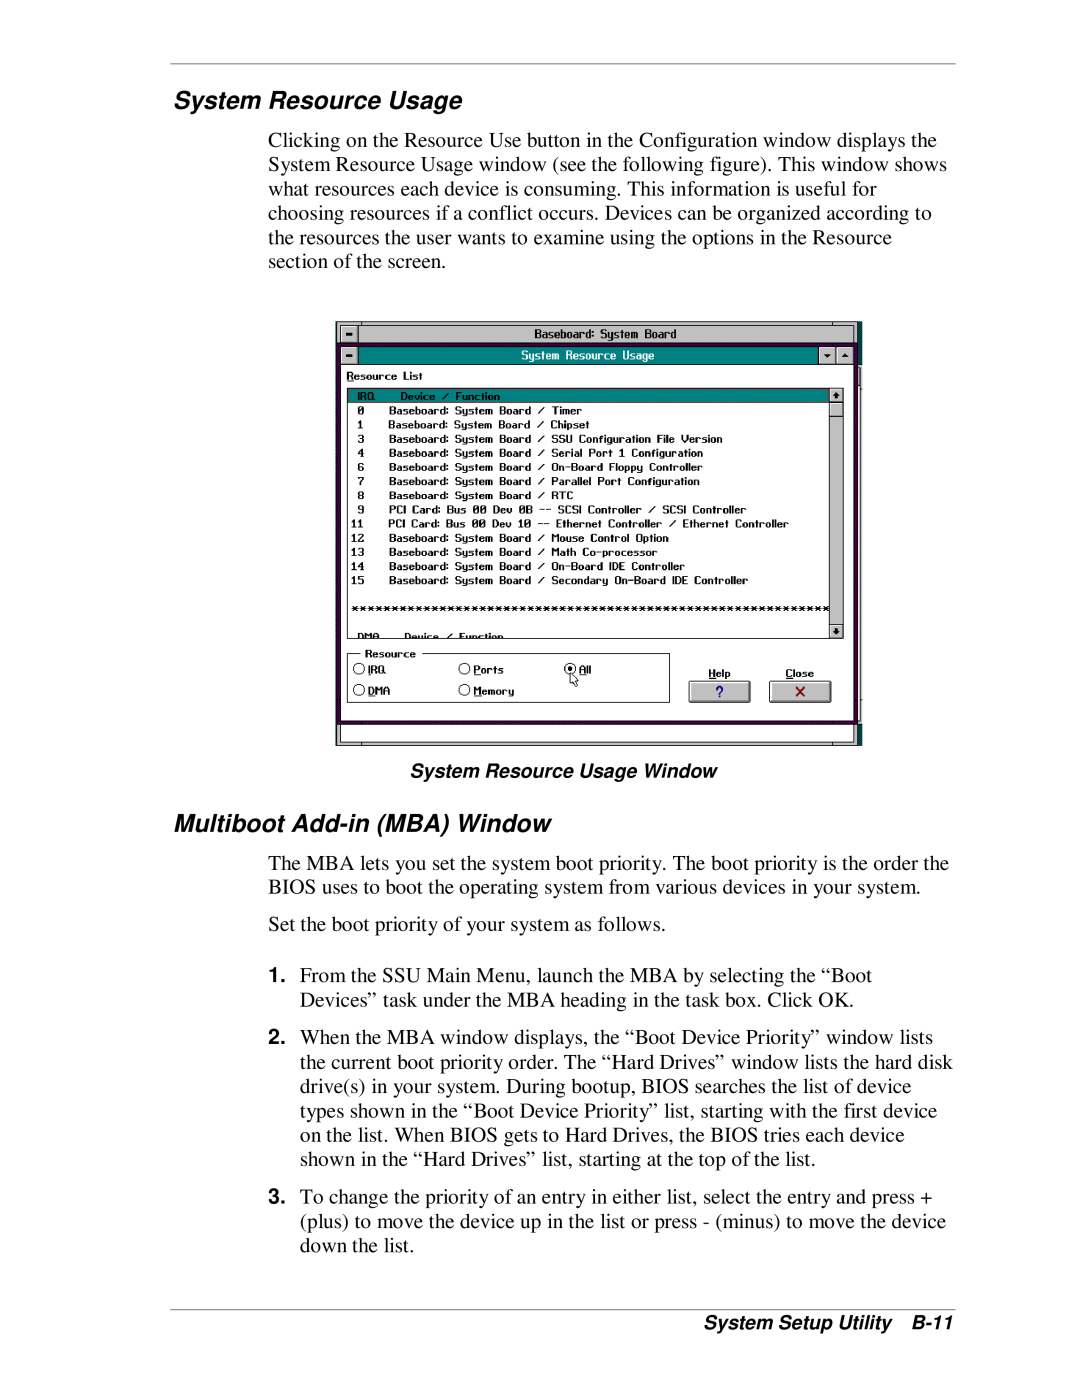 NEC MH4500 manual System Resource Usage, Multiboot Add-inMBA Window 